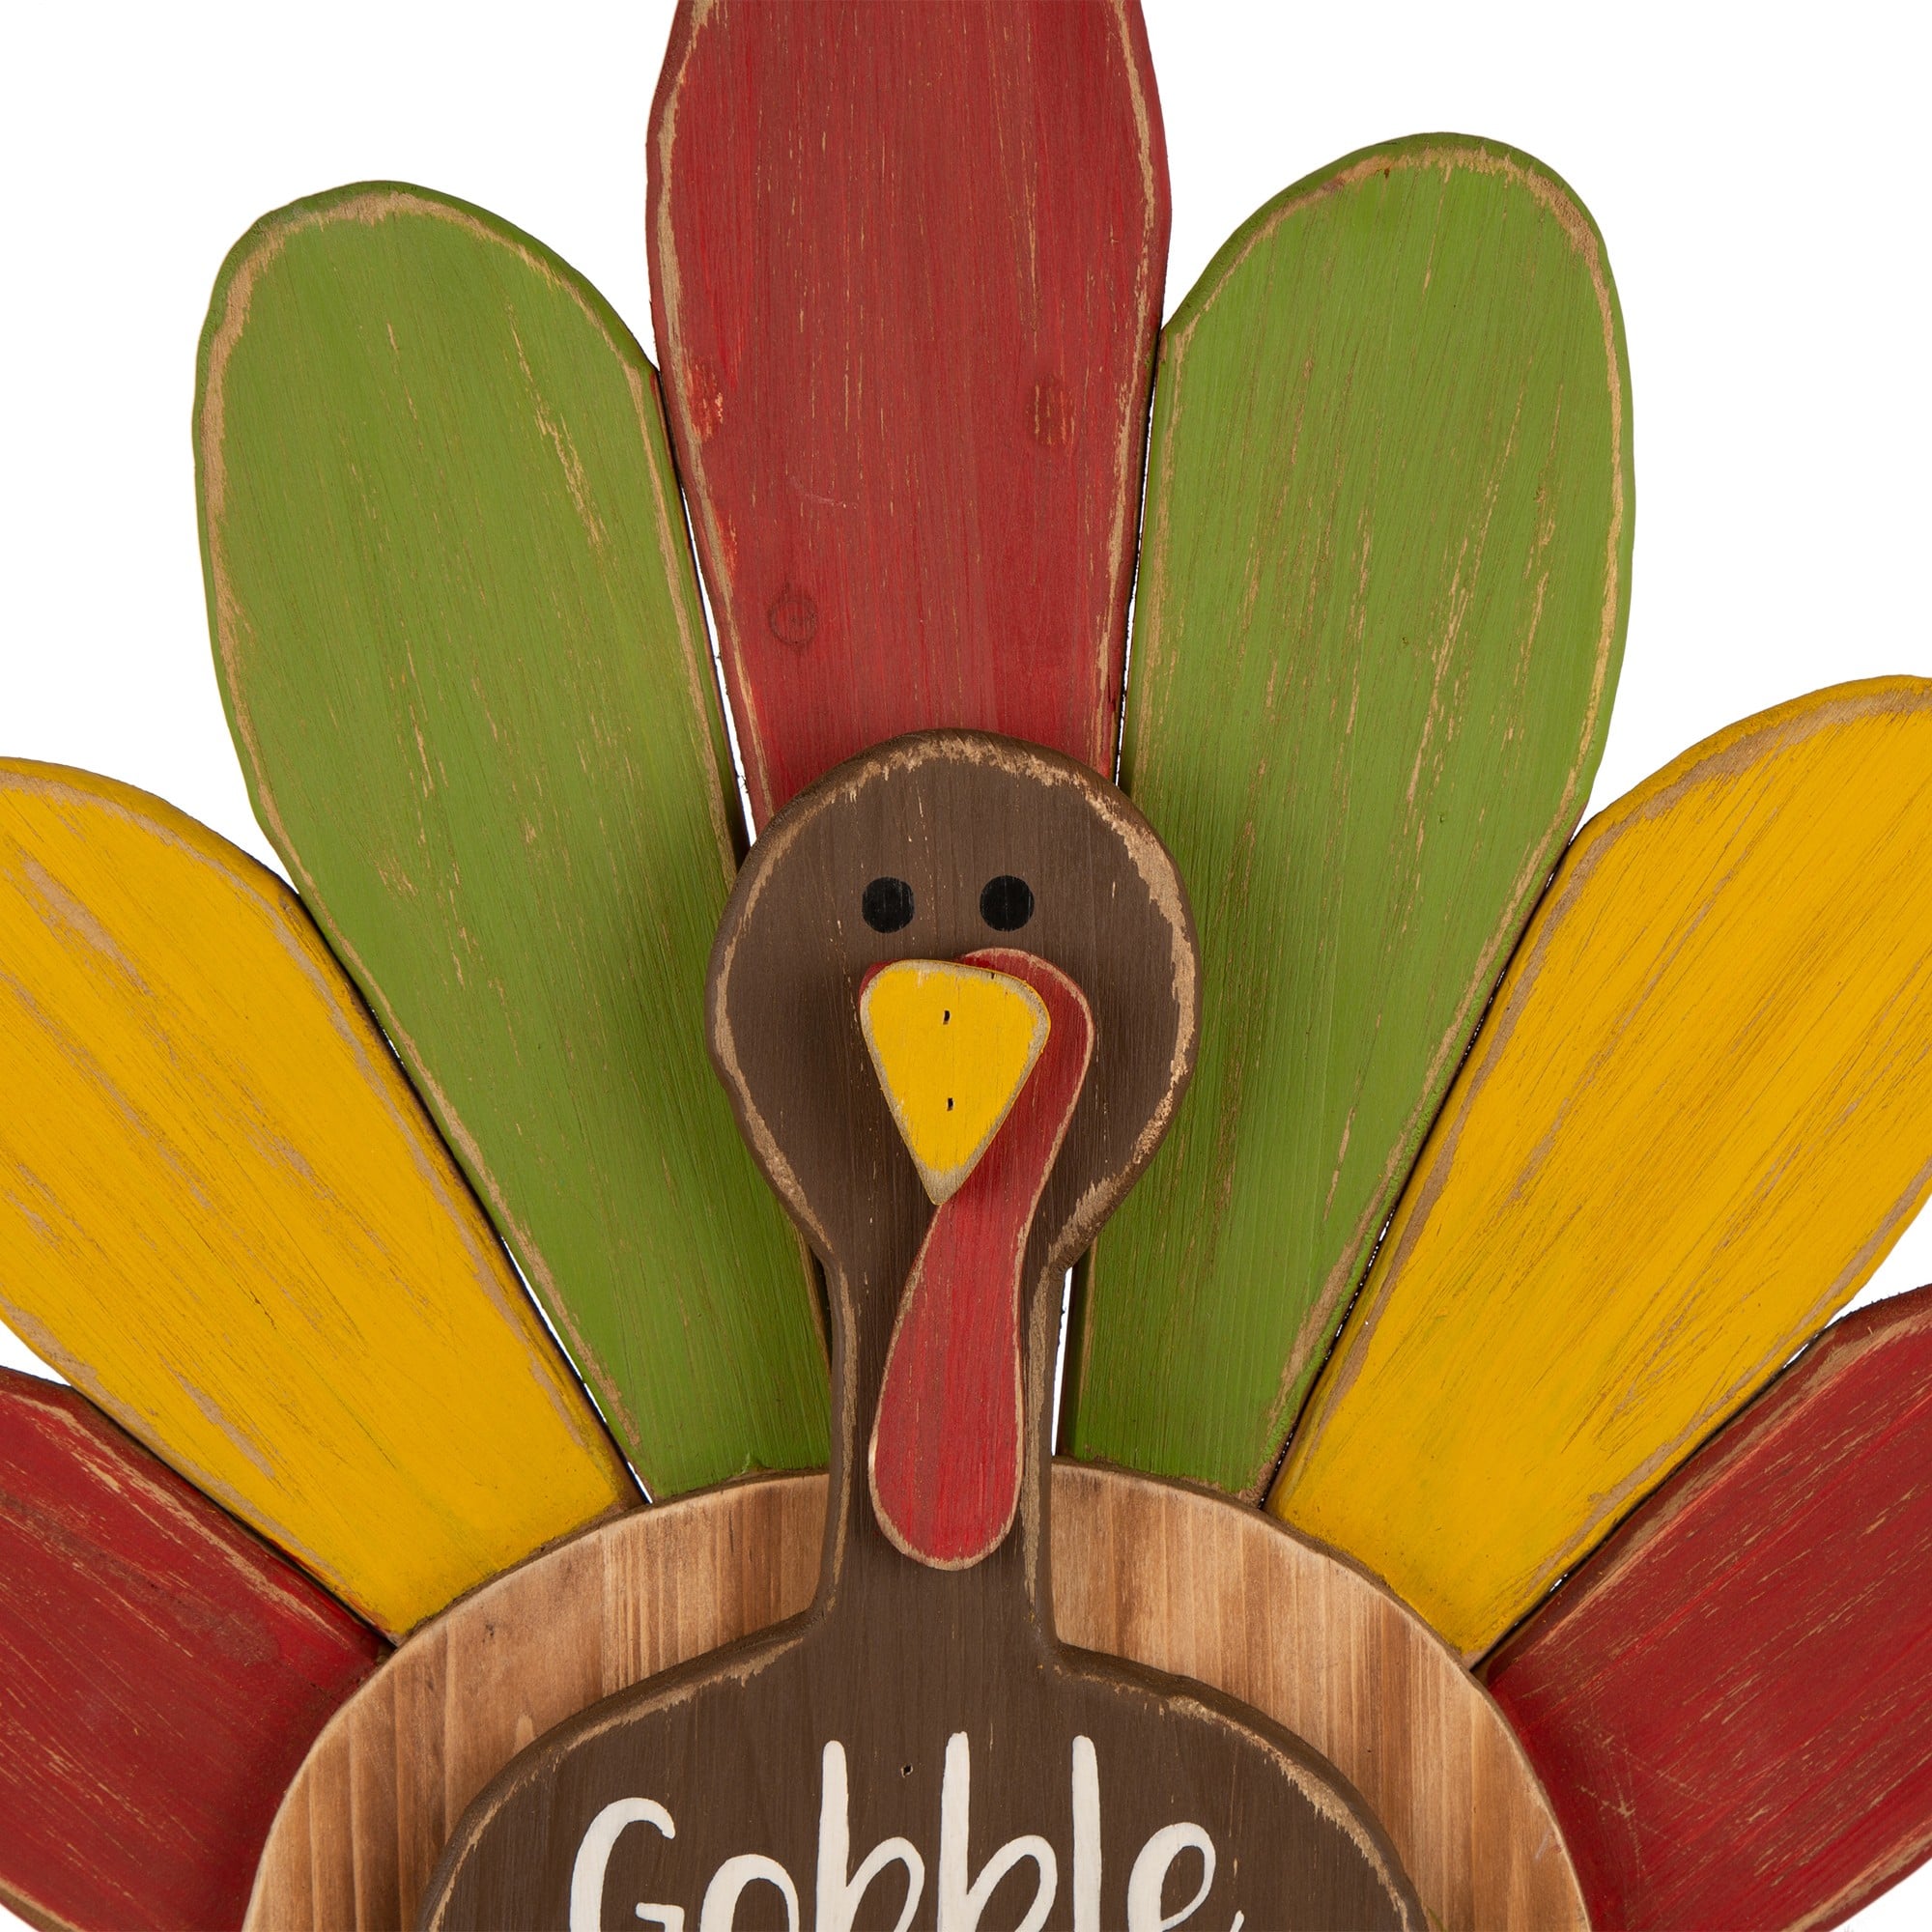 Glitzhome&#xAE; 2ft. Thanksgiving Wooden Turkey Standing D&#xE9;cor